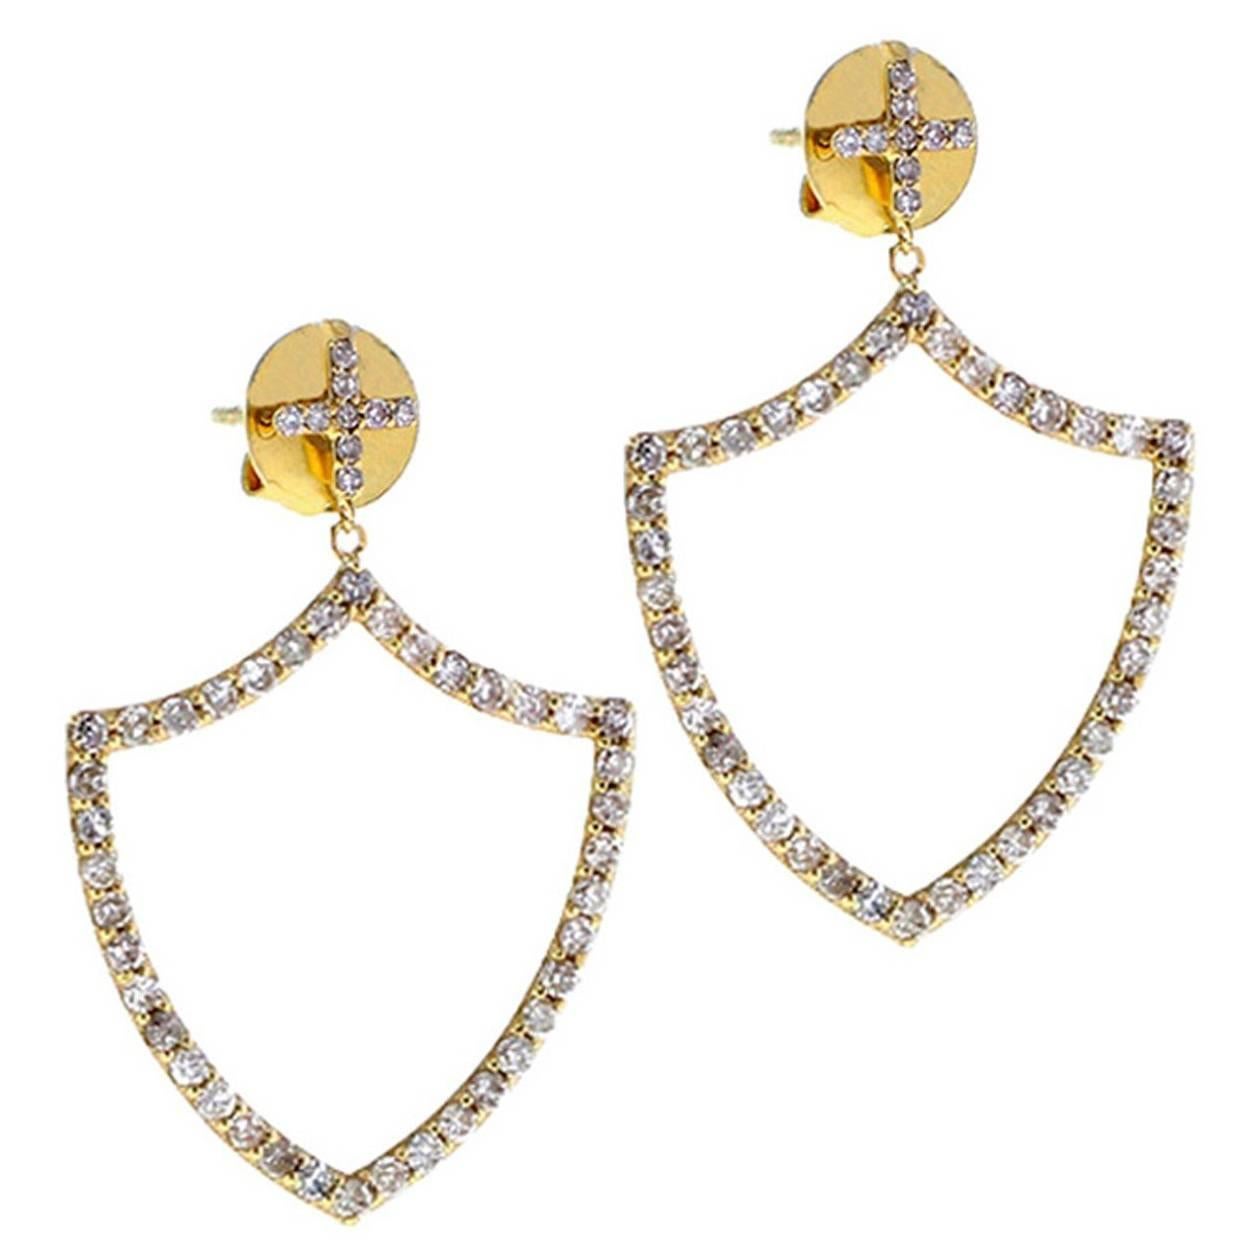 Insignia Renaissance Shield Gold and Diamond Earrings